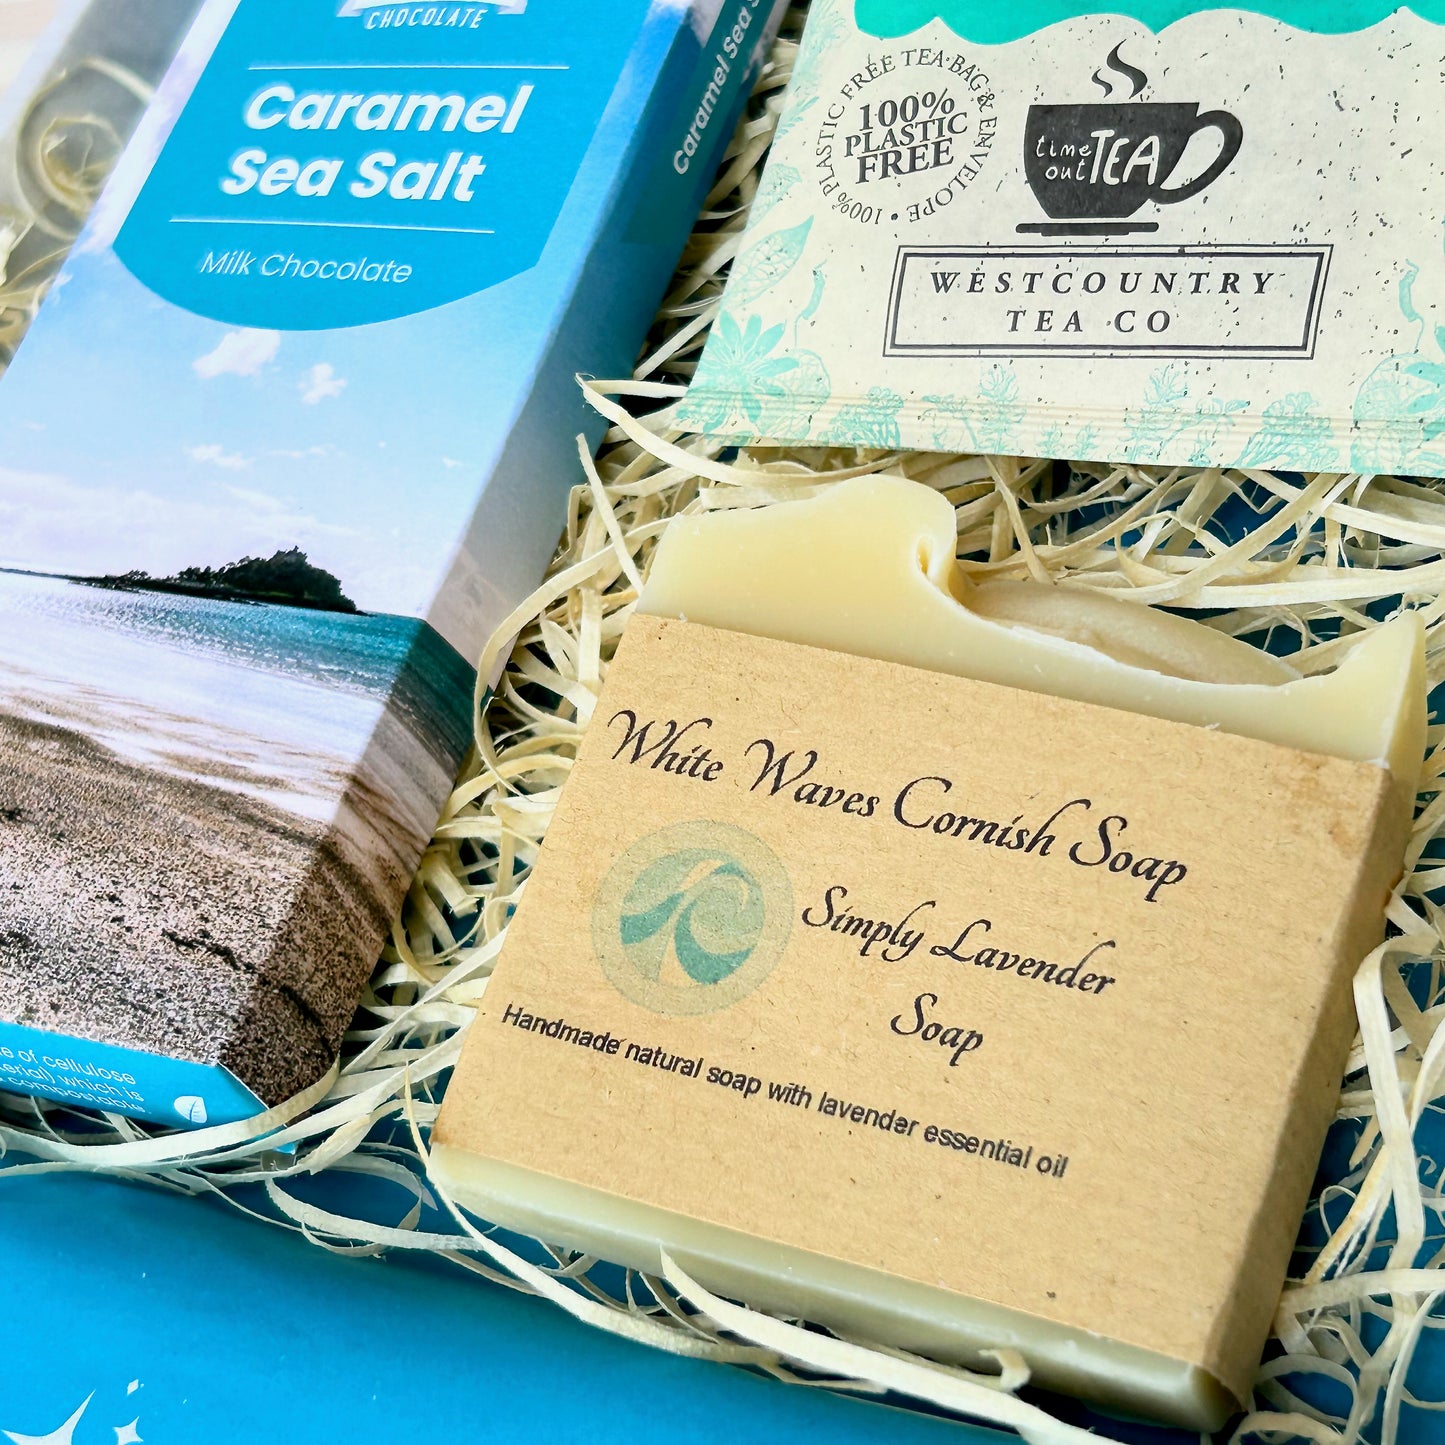 Cornish Gifts by Post - Cornish Letterbox Gift Set with Cornish soap, Cornish chocolate, and Cornish tea